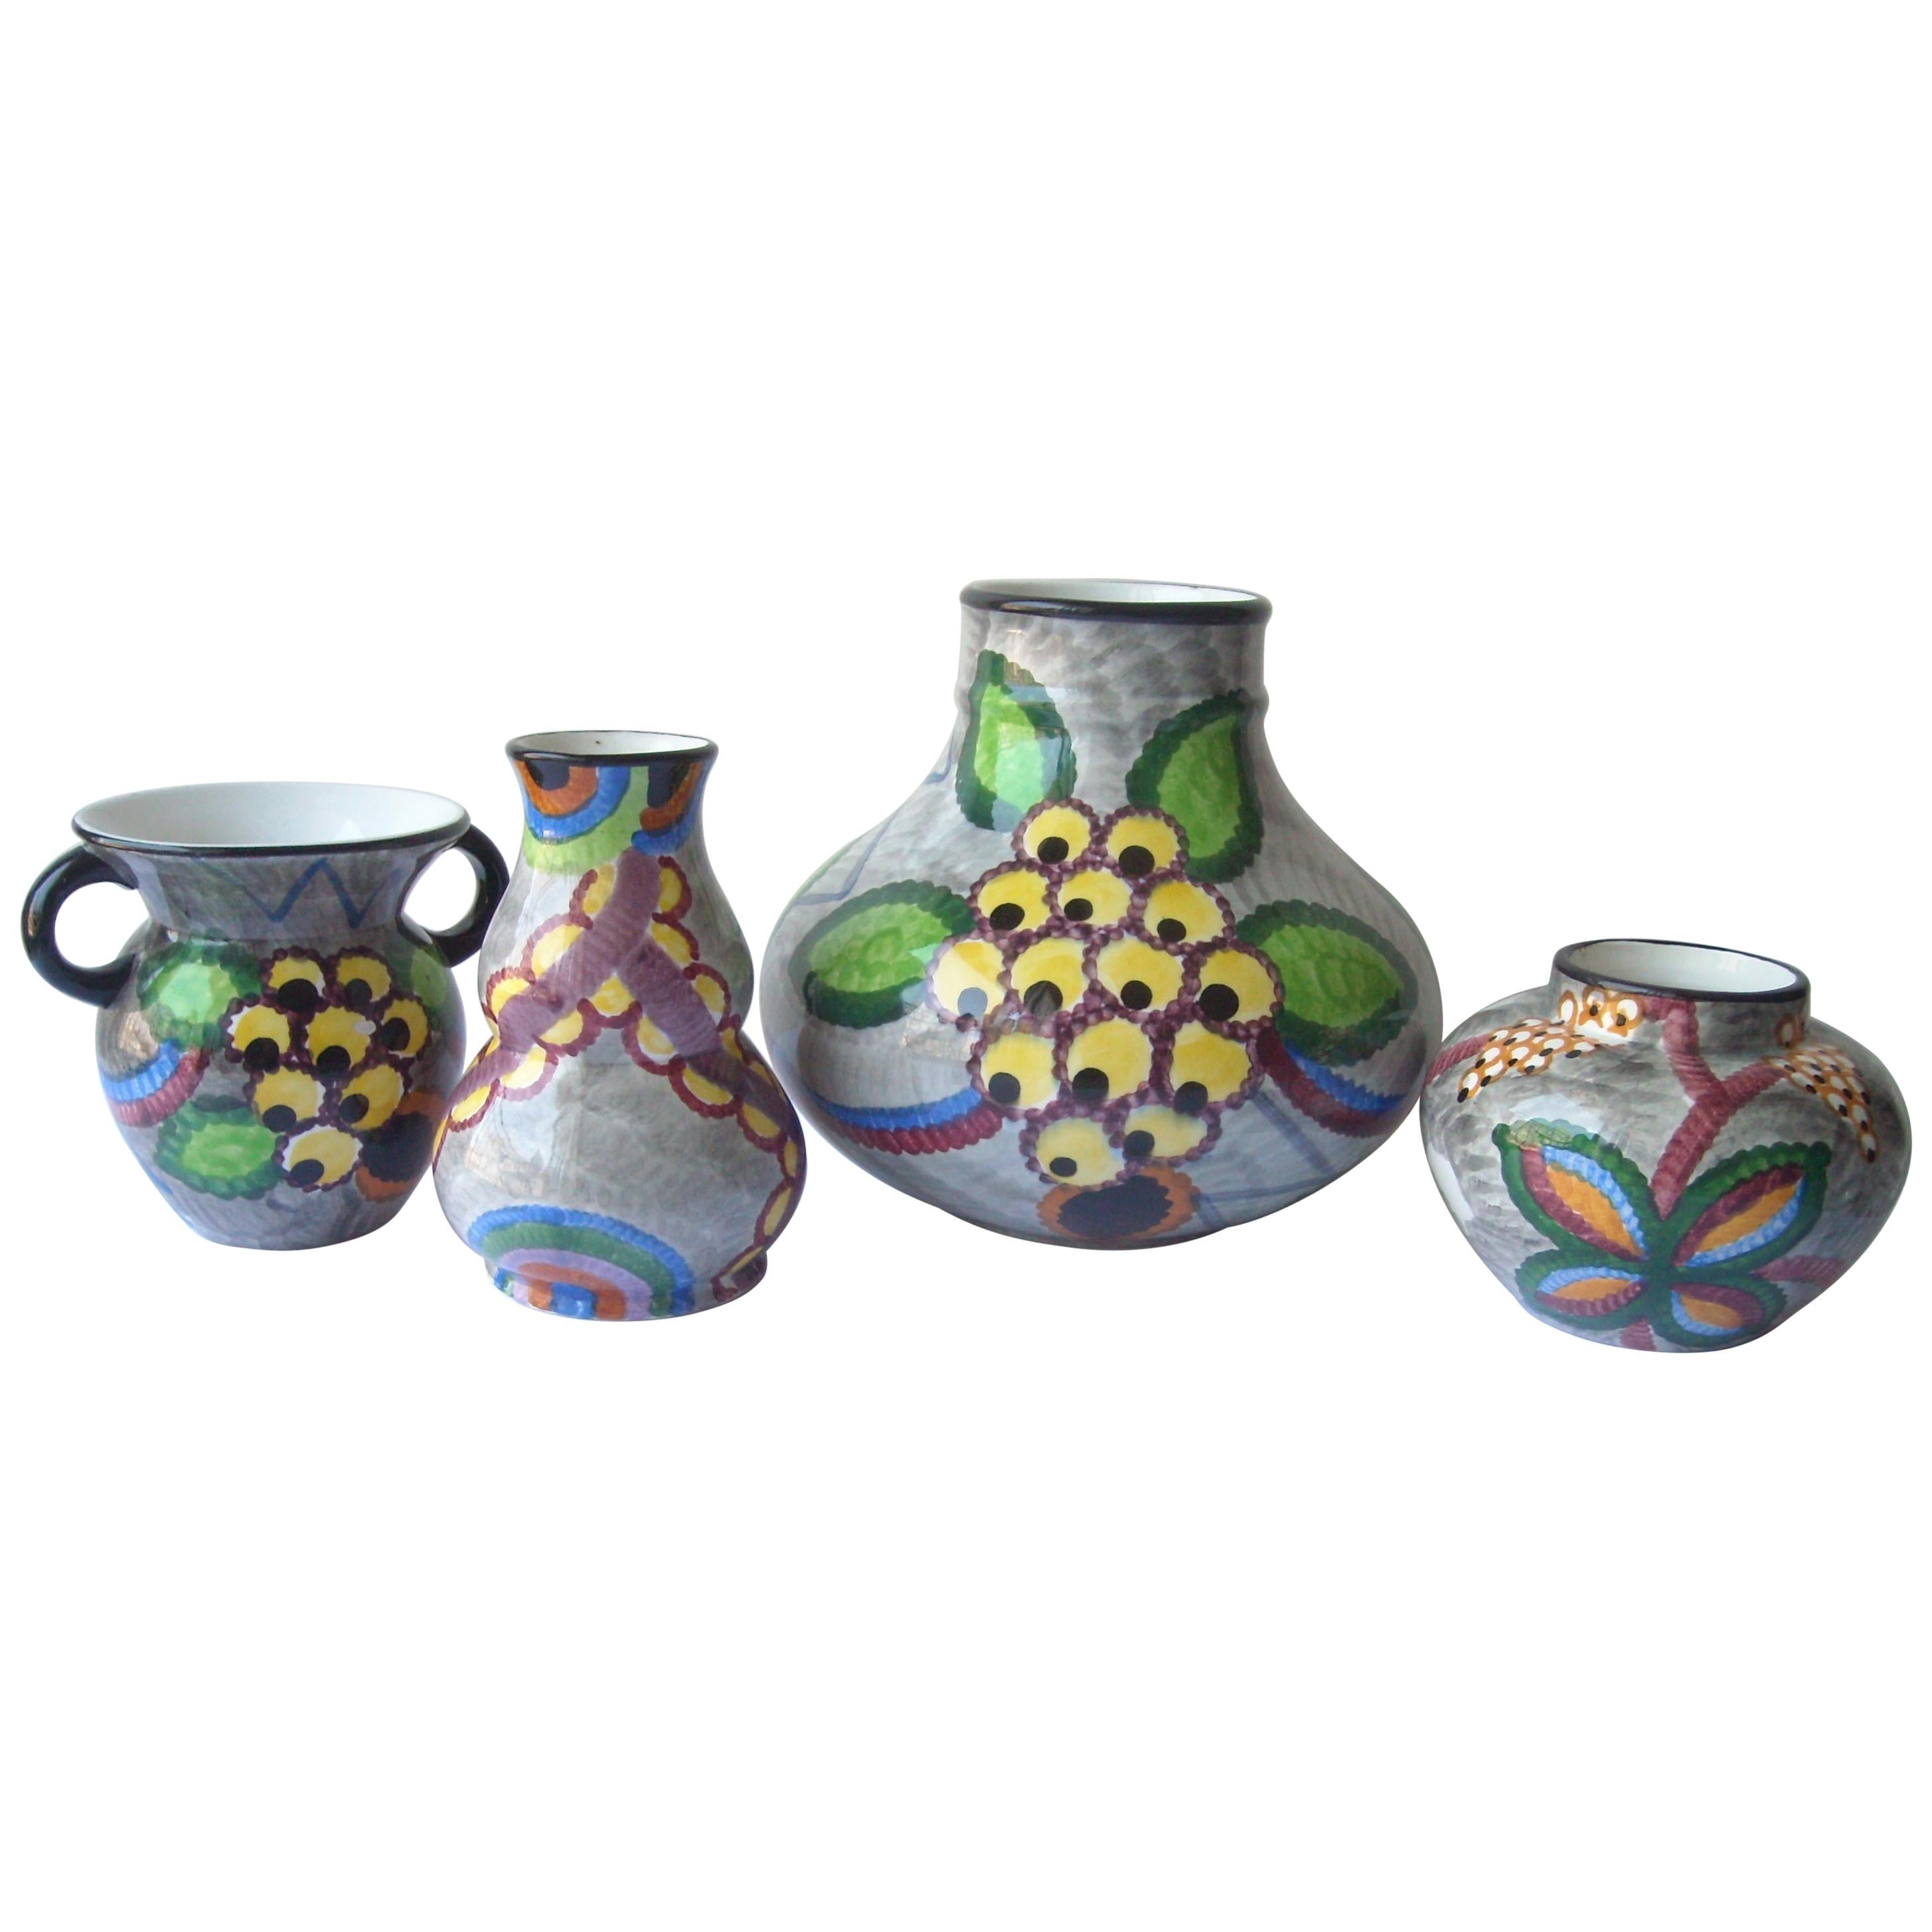 Eva Zeisel Ceramic/Majolica Vases by SMF Schramberg, Set of 4, Marked